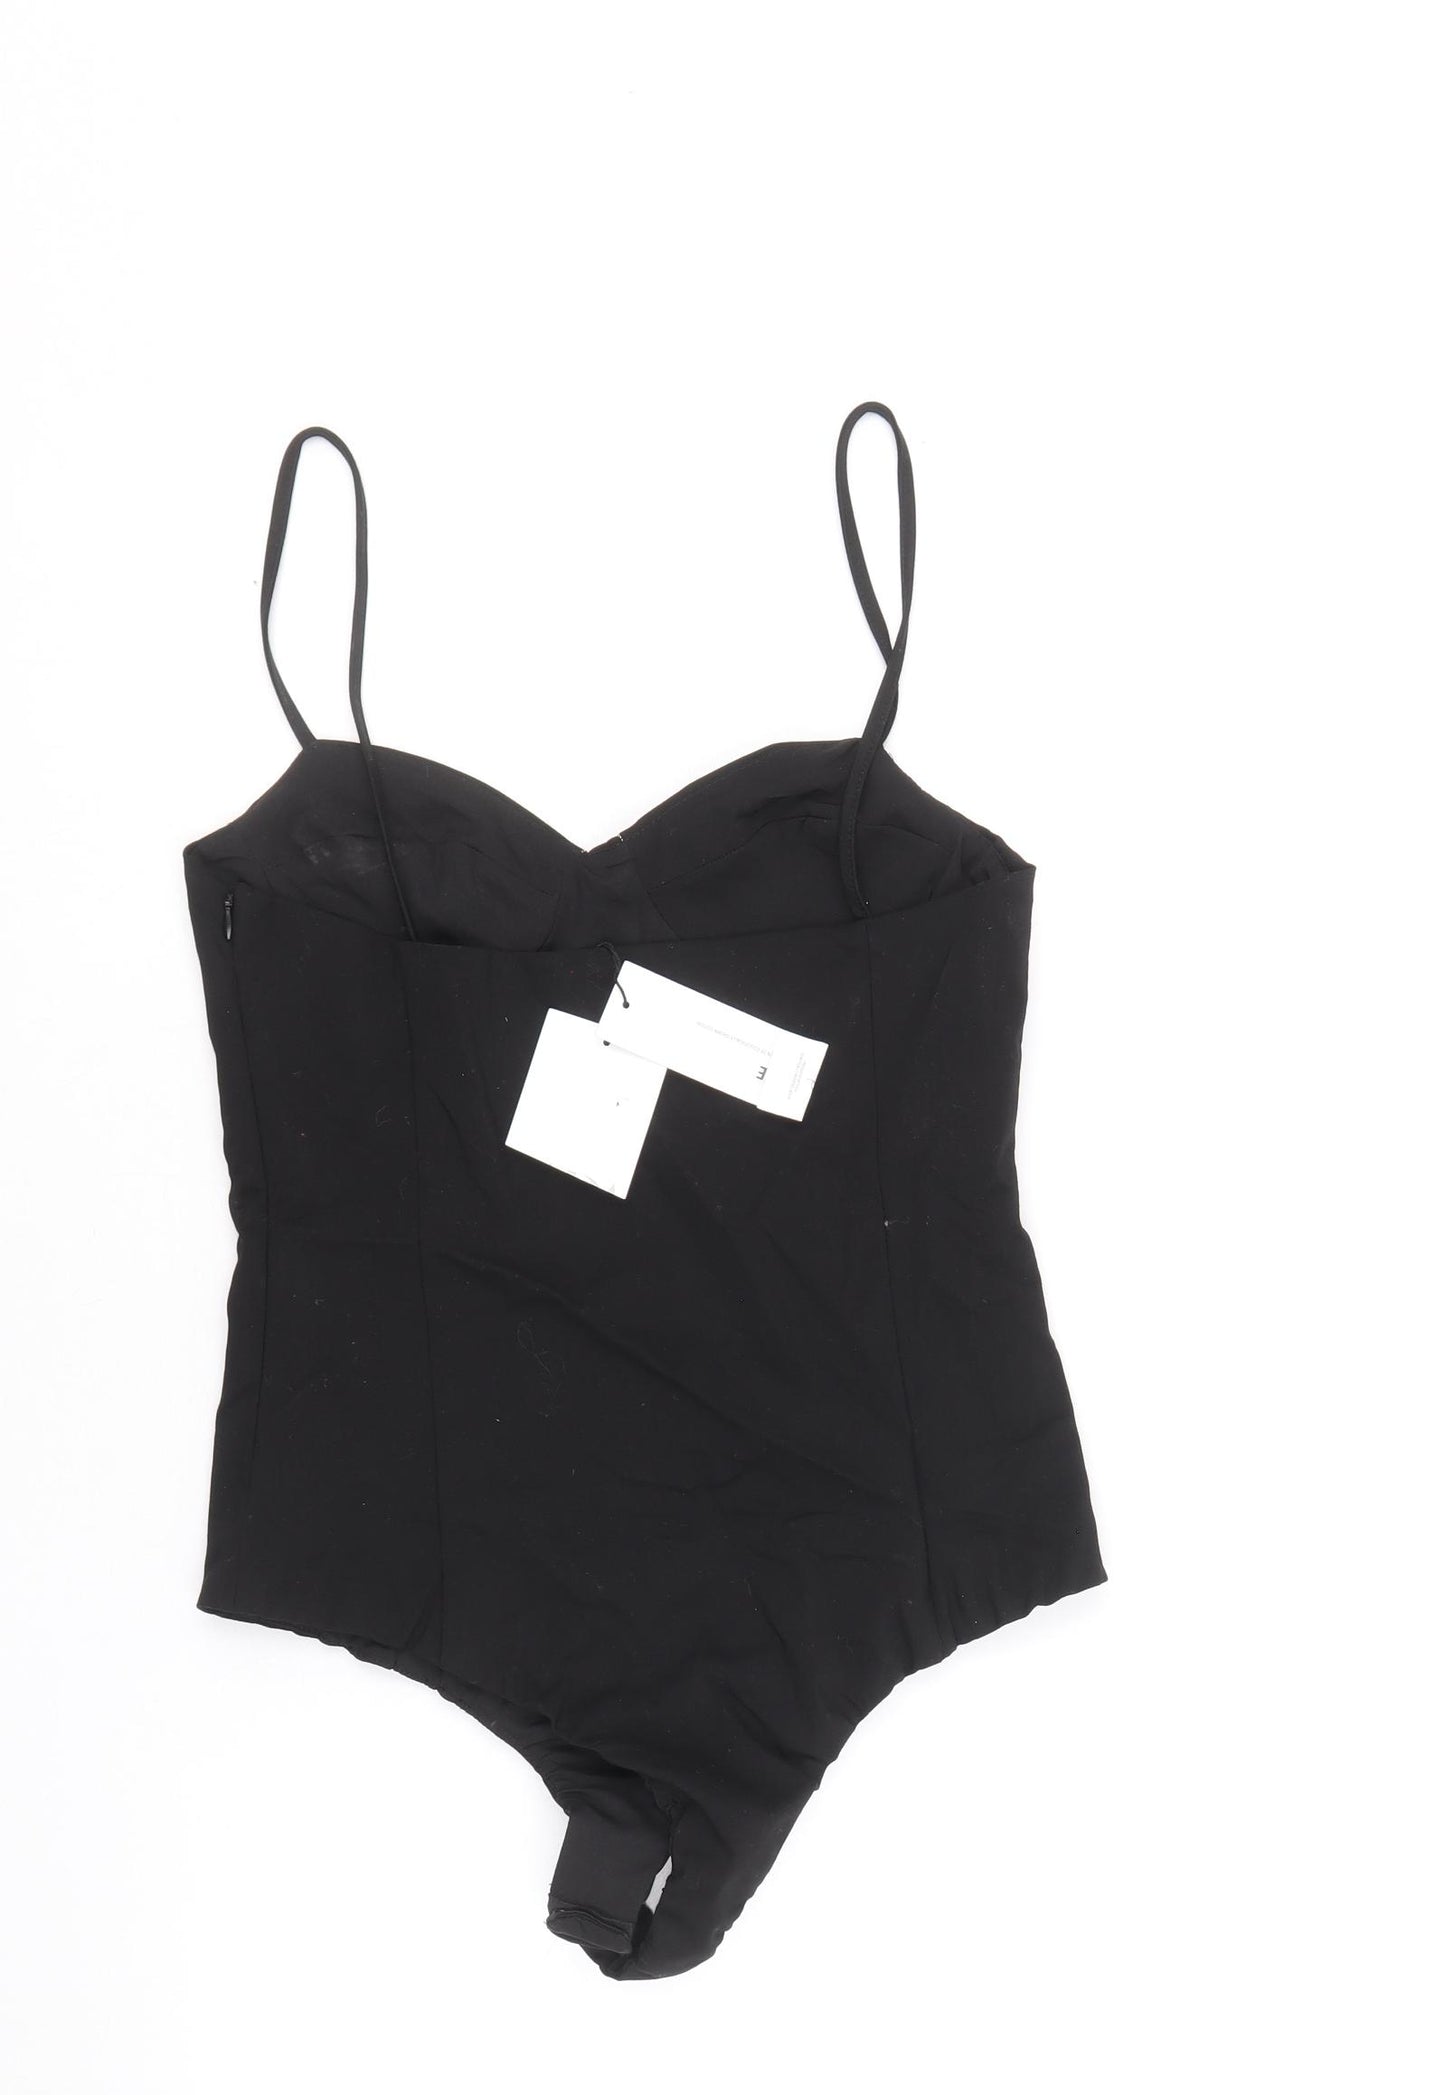 Zara Womens Black Cotton Bodysuit One-Piece Size S Zip - Contrast Stitching